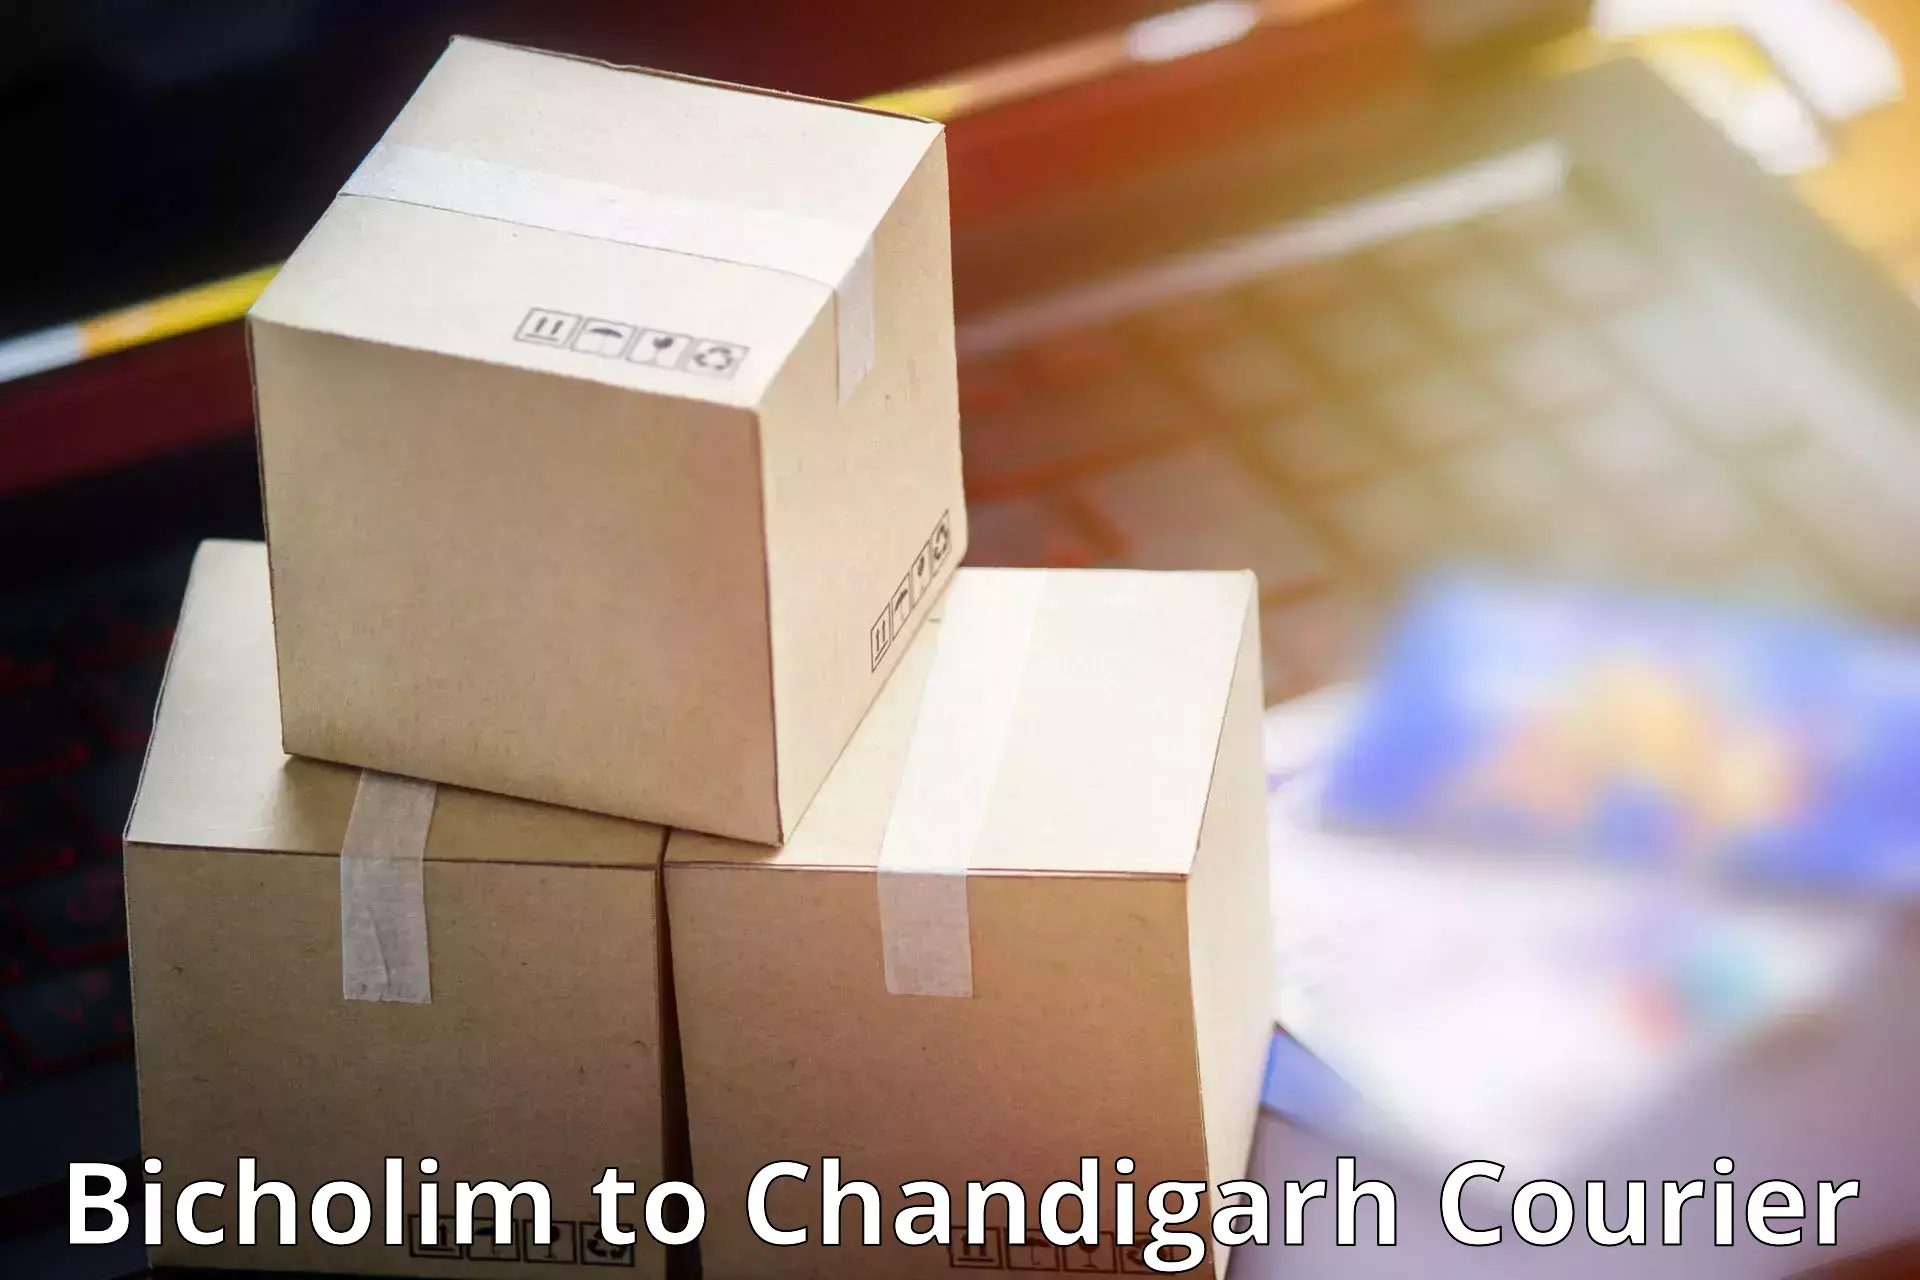 Express logistics service Bicholim to Chandigarh